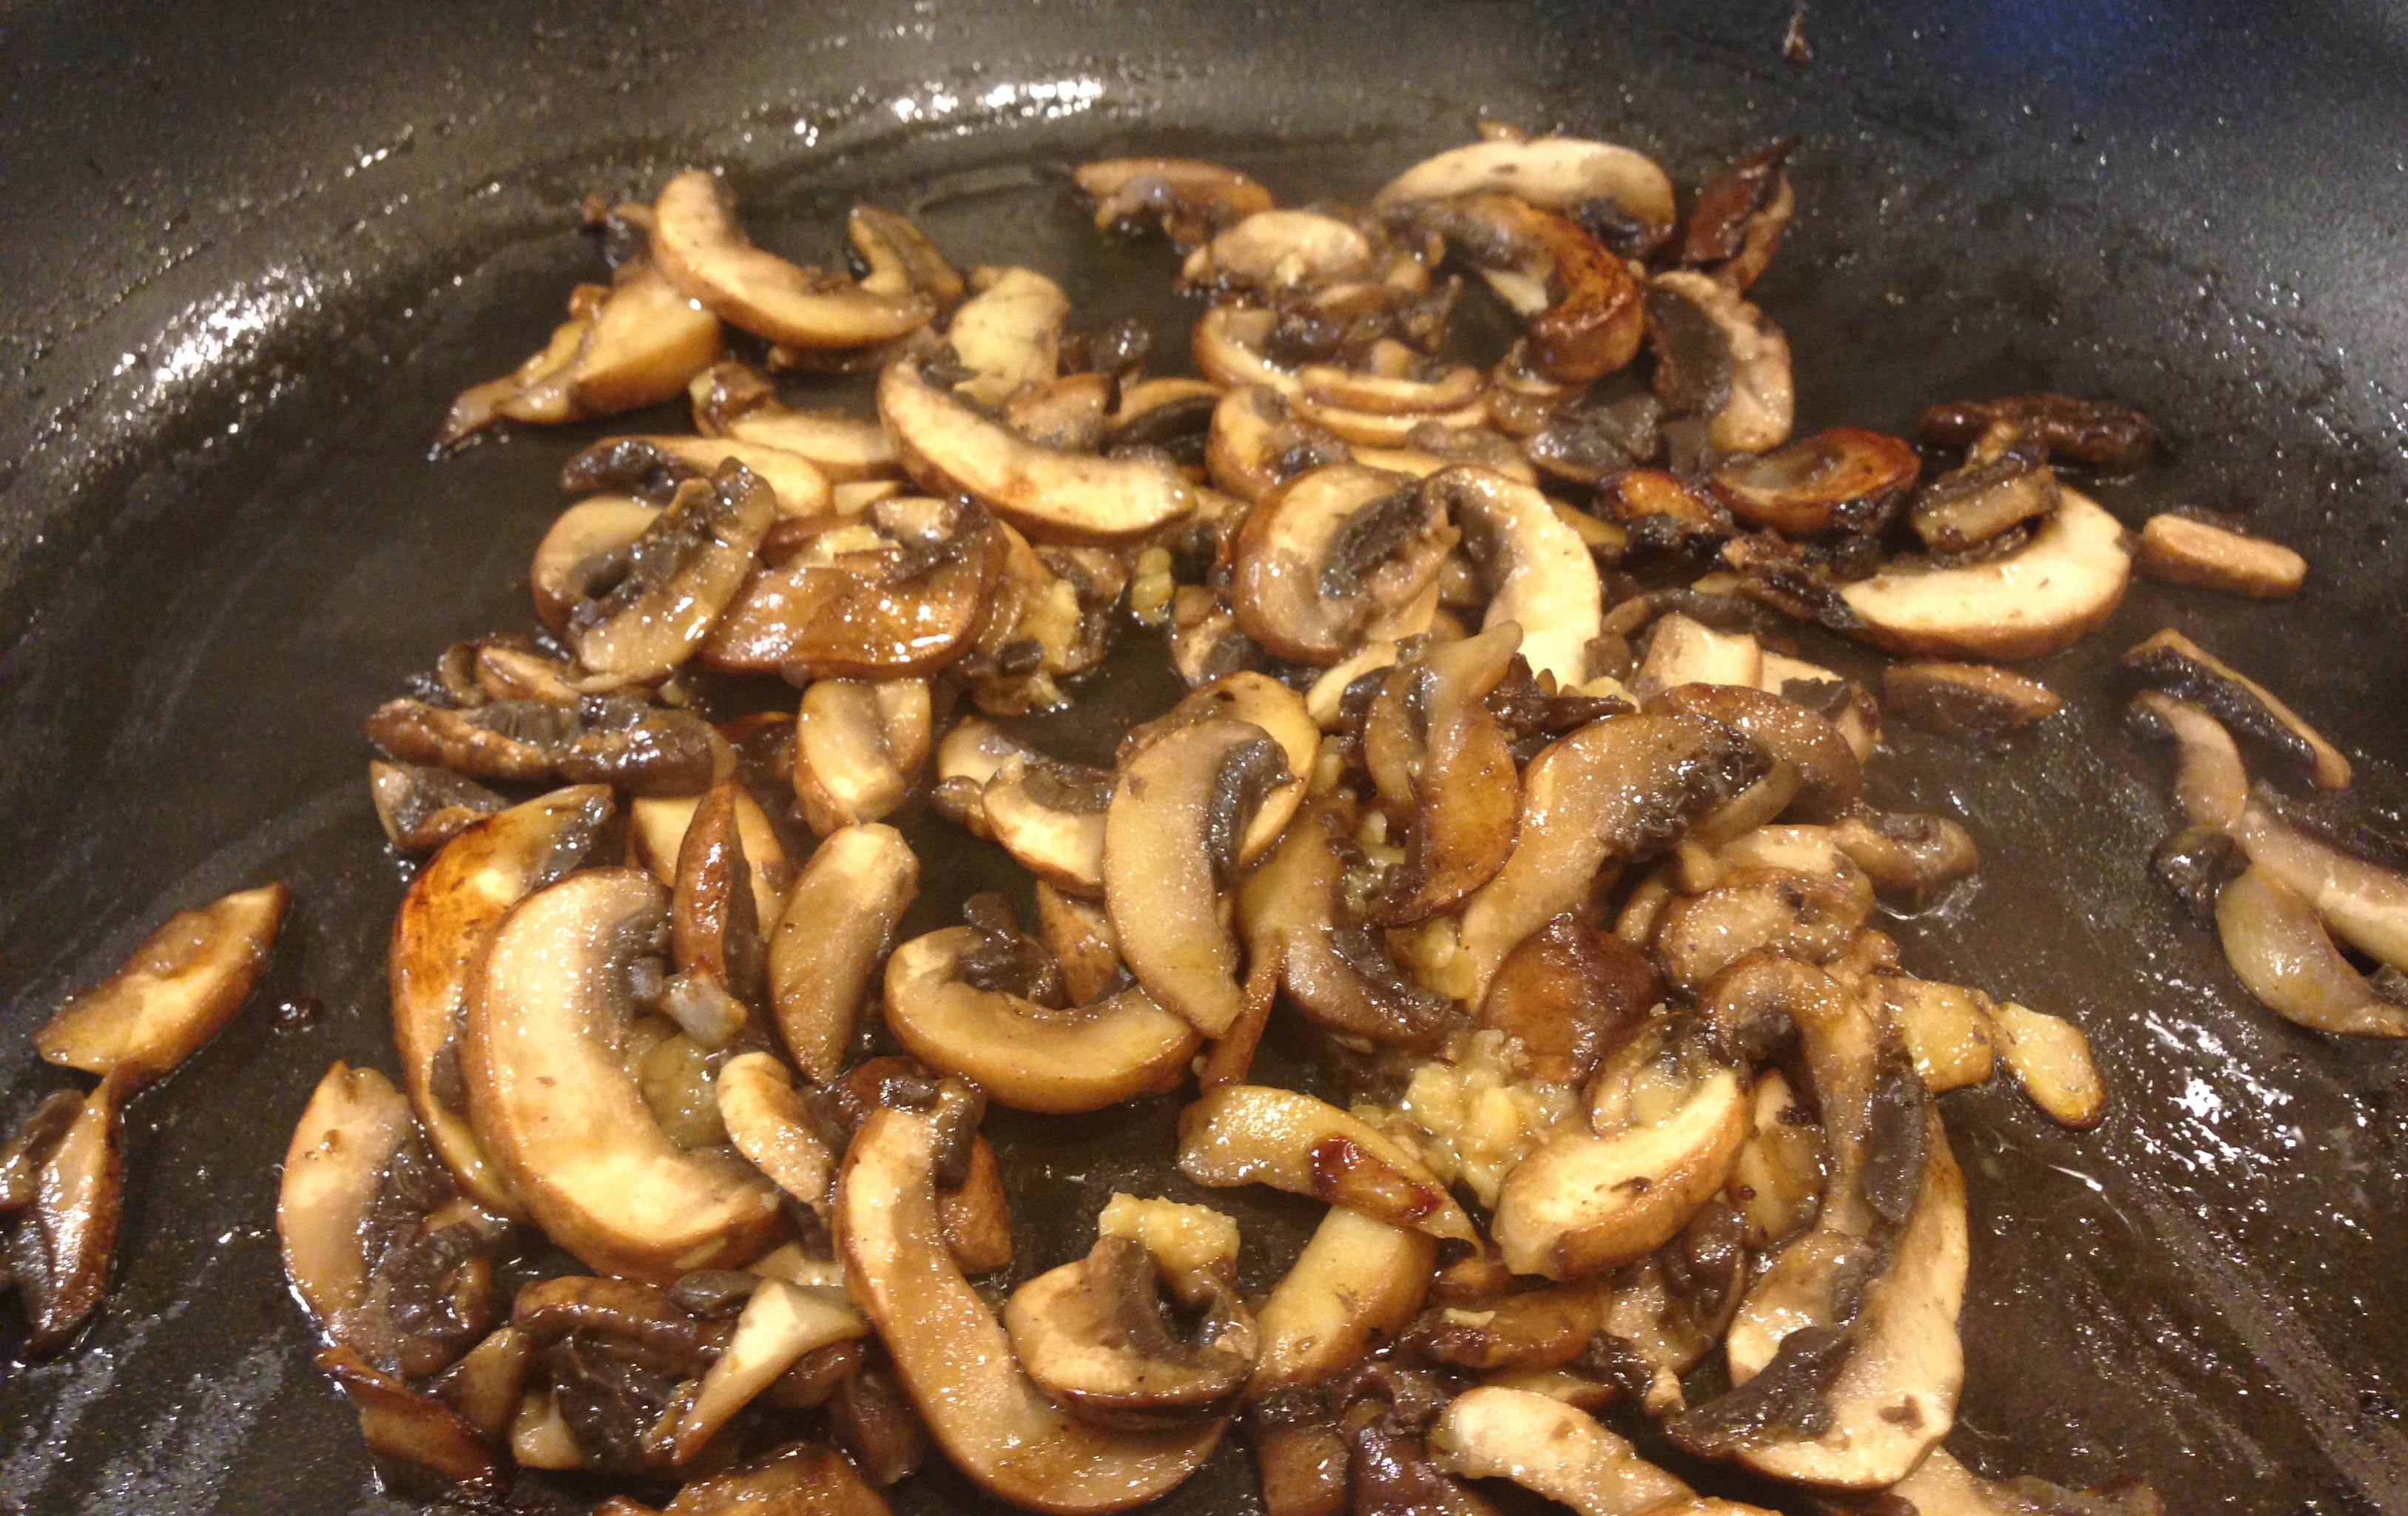 Saute the mushrooms